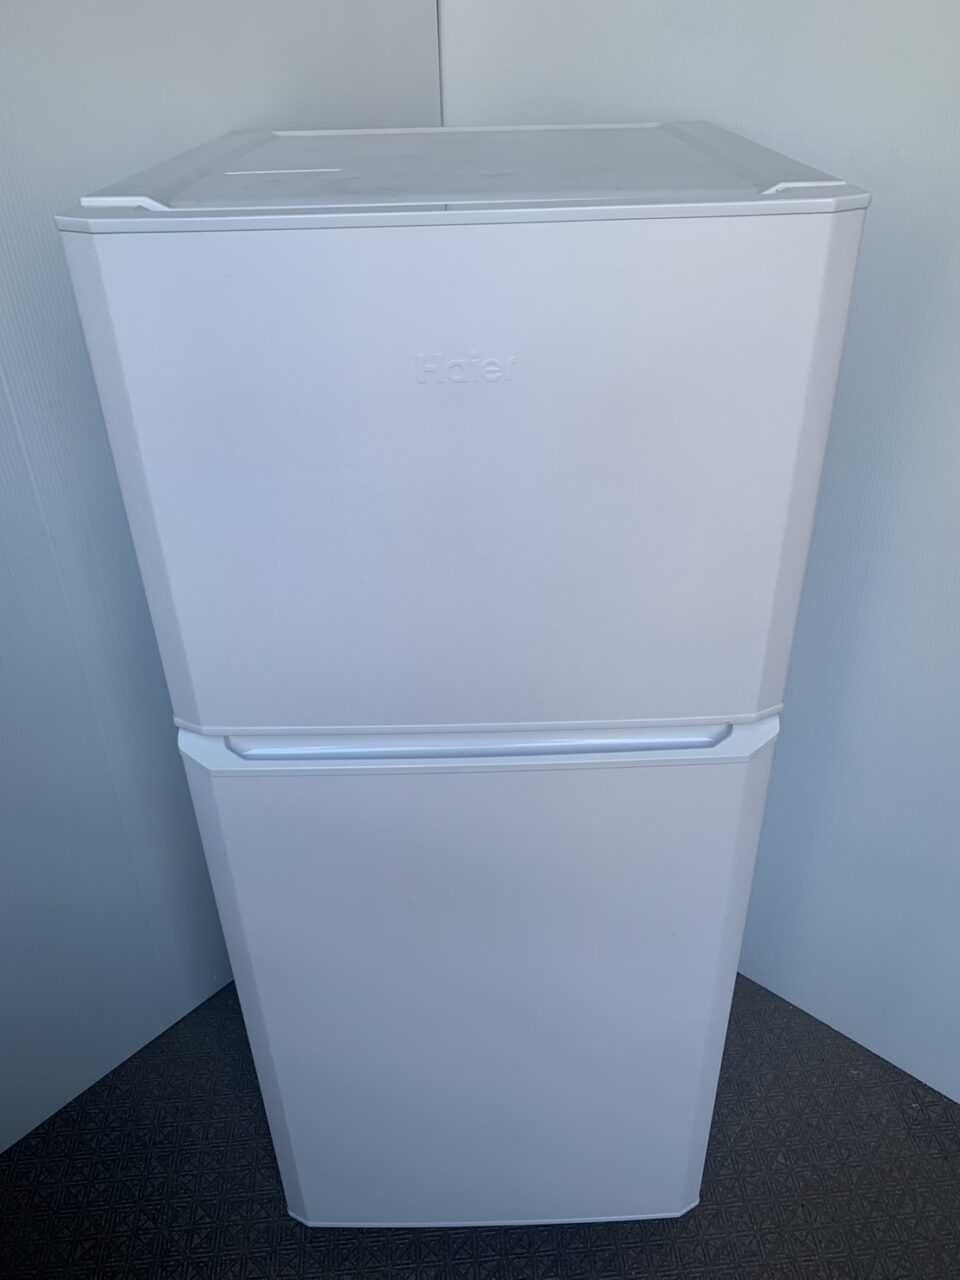 Ｈａｉｅｒ製冷凍冷蔵庫(値引きしました。) - キッチン家電